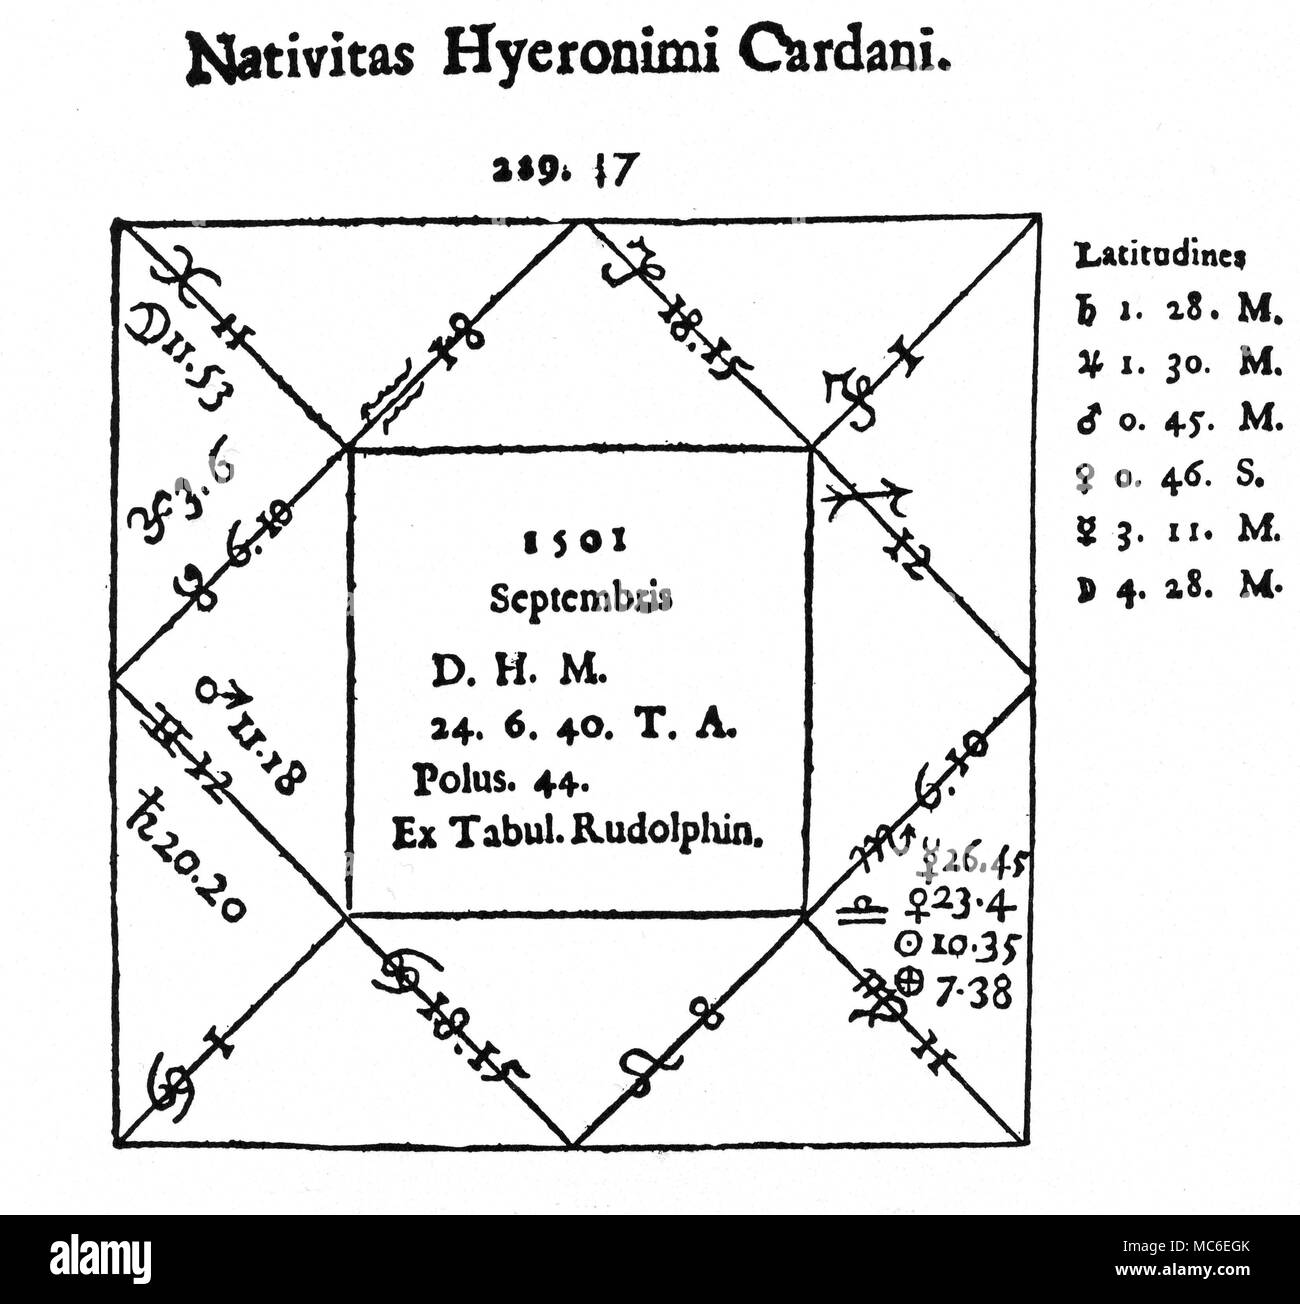 HOROSCOPES - CARDAN Horoscope of the occultist Hieronymus Cardan, born on 24 September 1501. From J. B. Morin de Villefranche, Astrolologia Gallica, 1661. Stock Photo